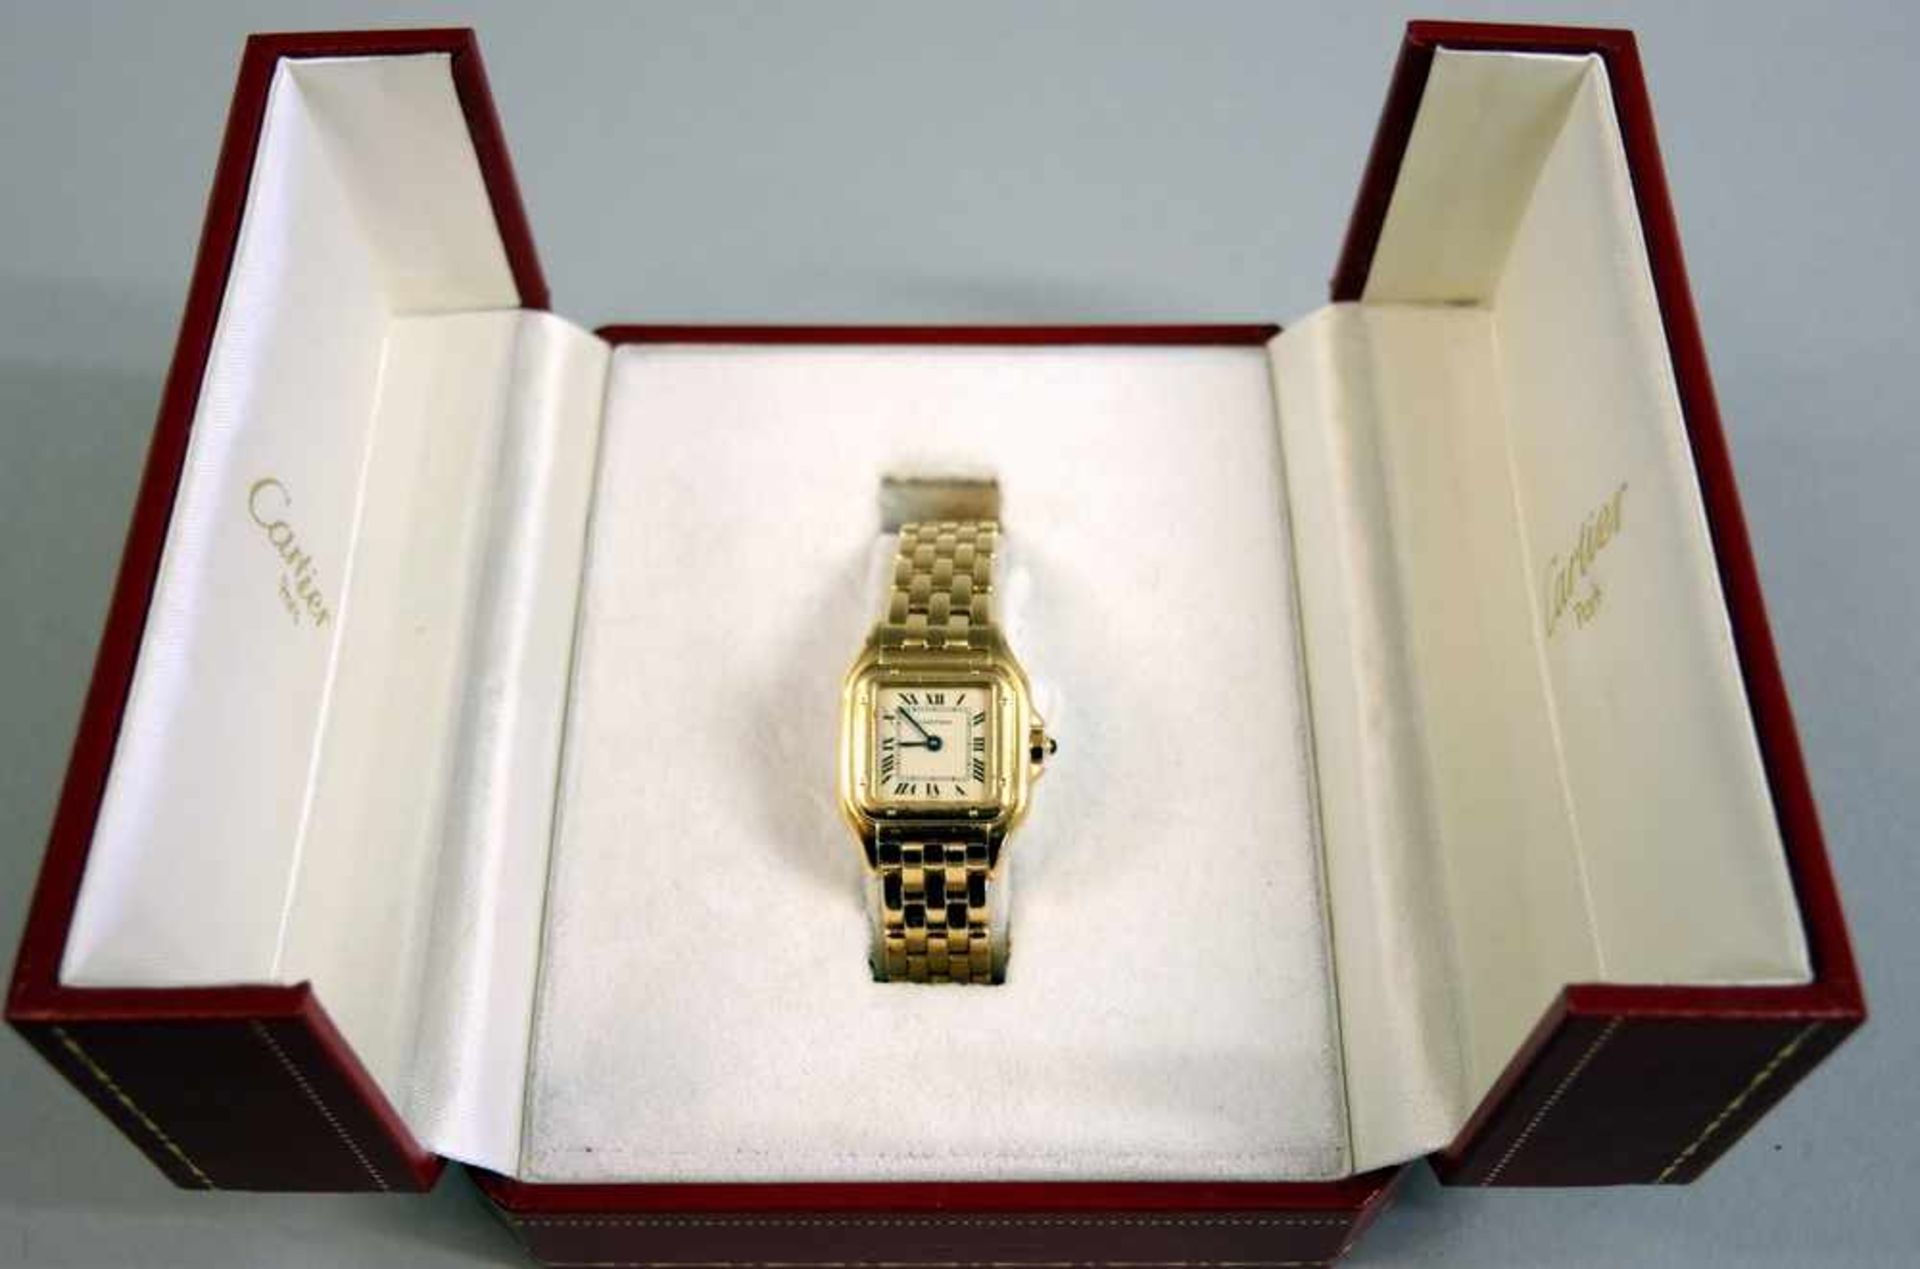 Cartier Armbanduhr Damen, Panthere in 18 K. Gold, Quarz. Mit Box, voll gangbar. 90er Jahre.